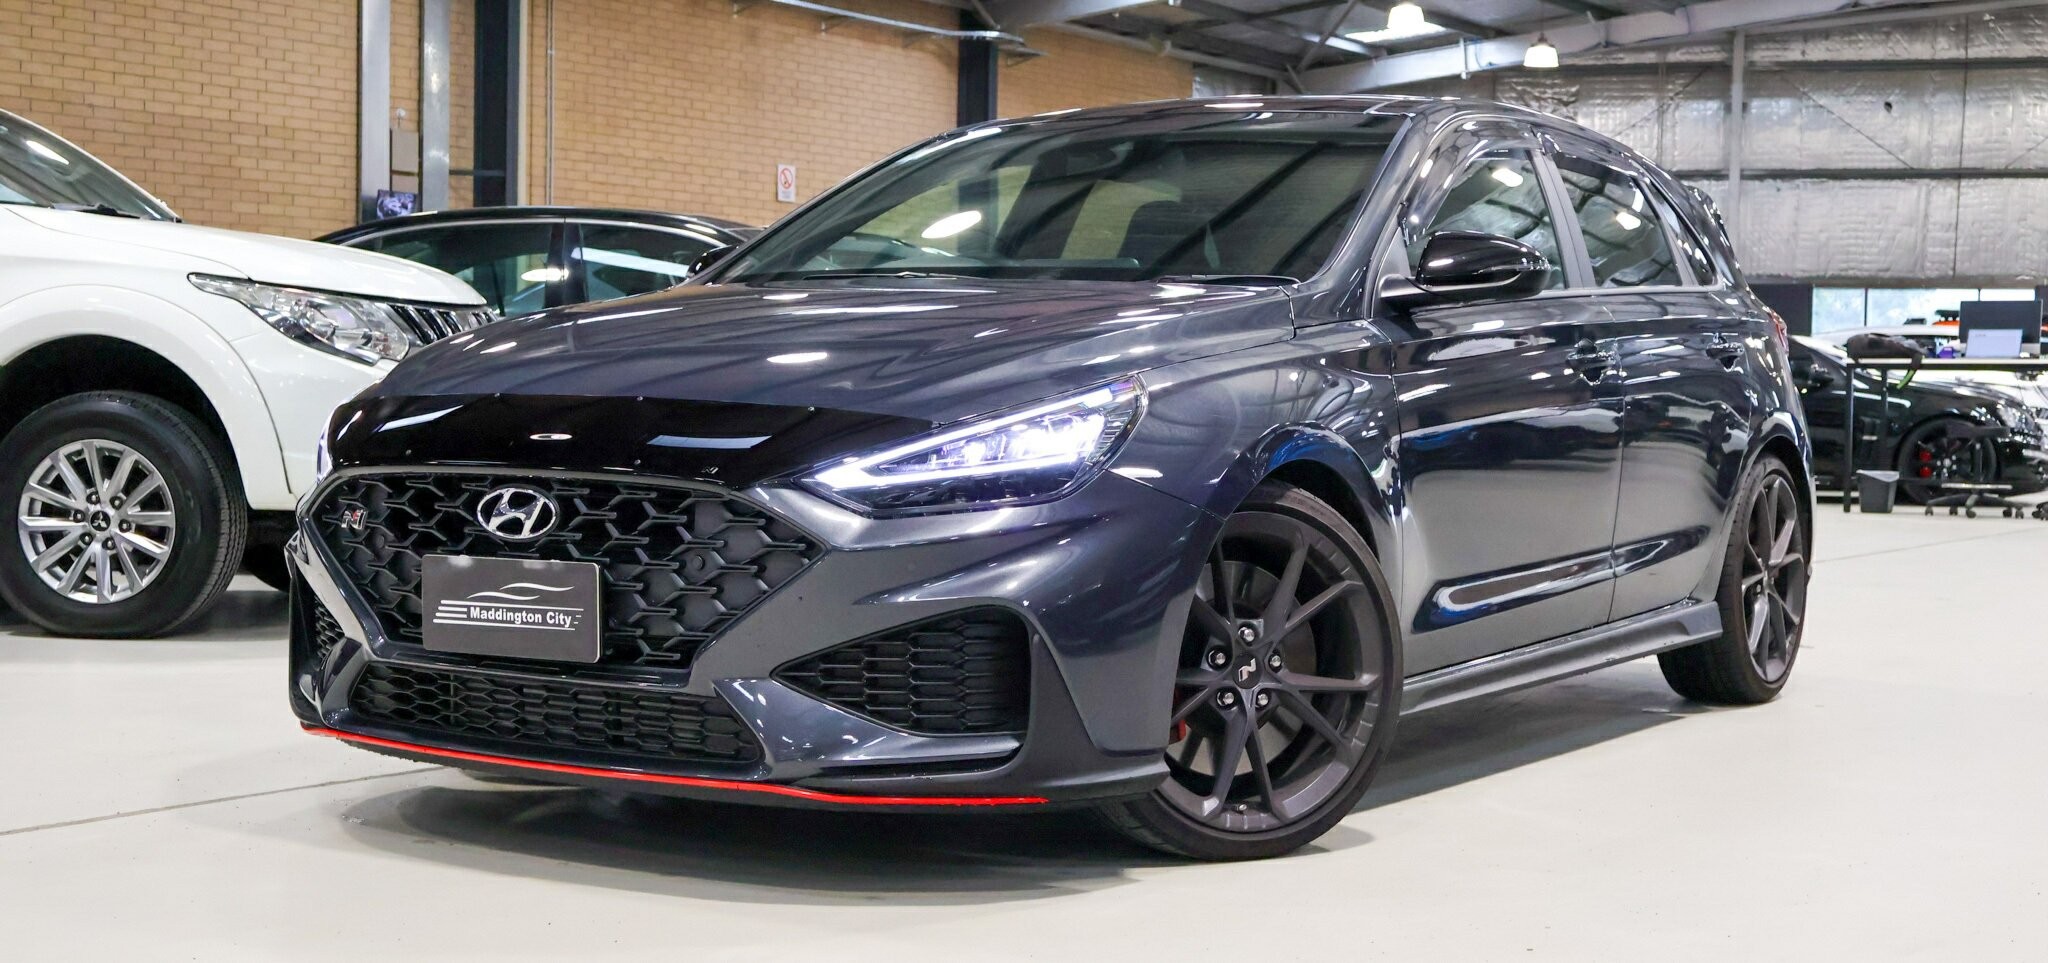 Hyundai I30 image 3